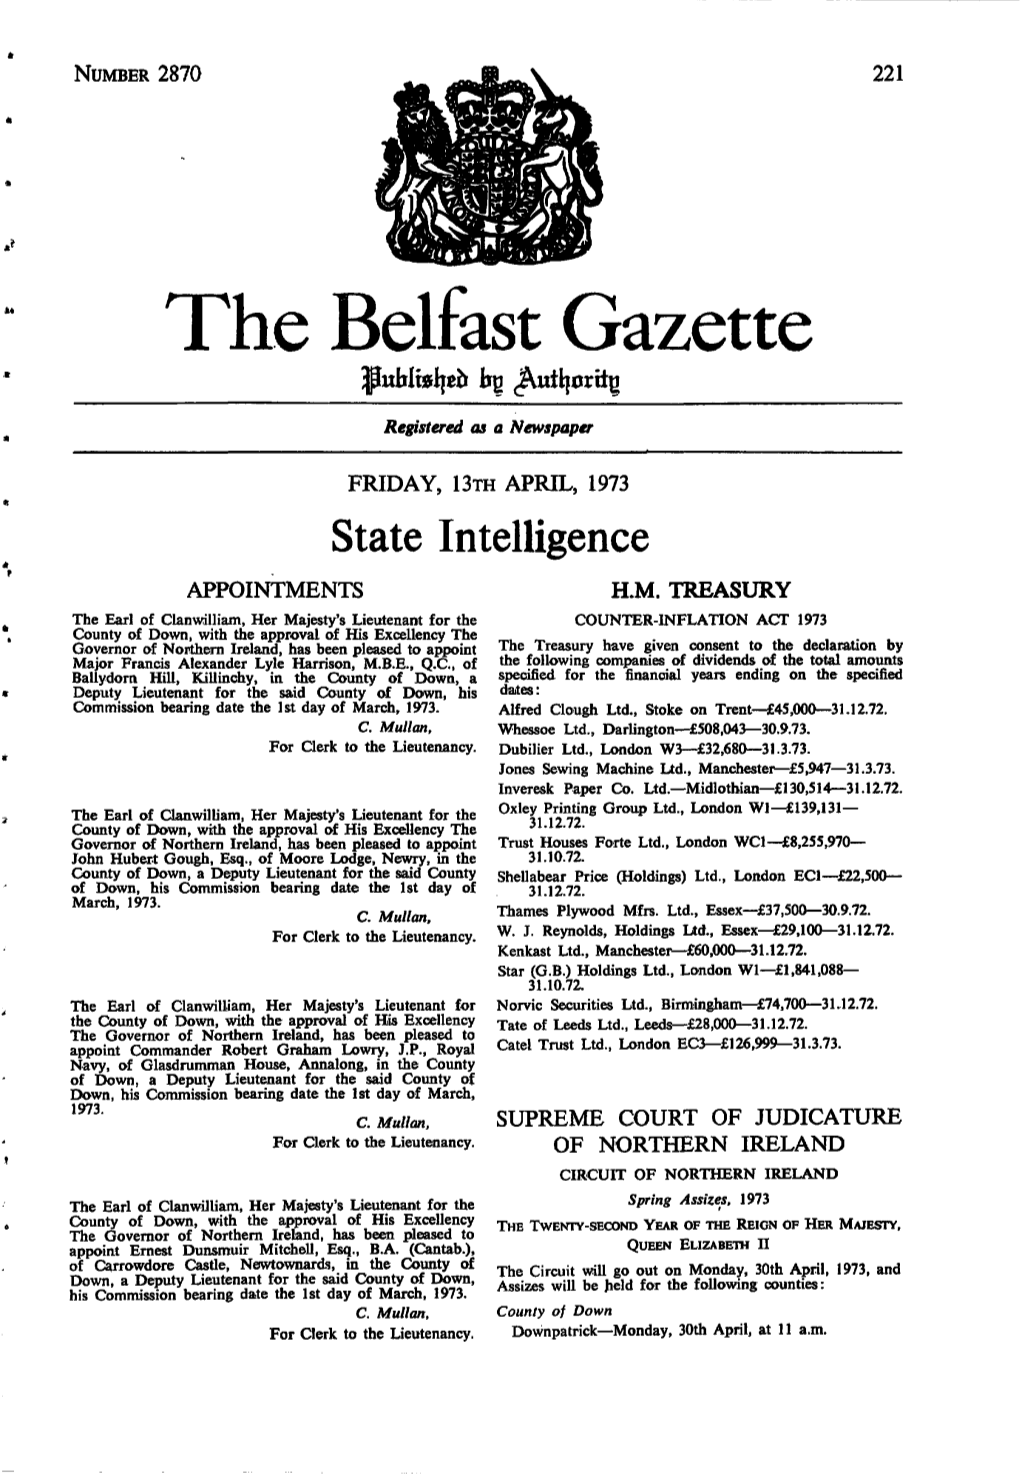 The Belfast Gazette By